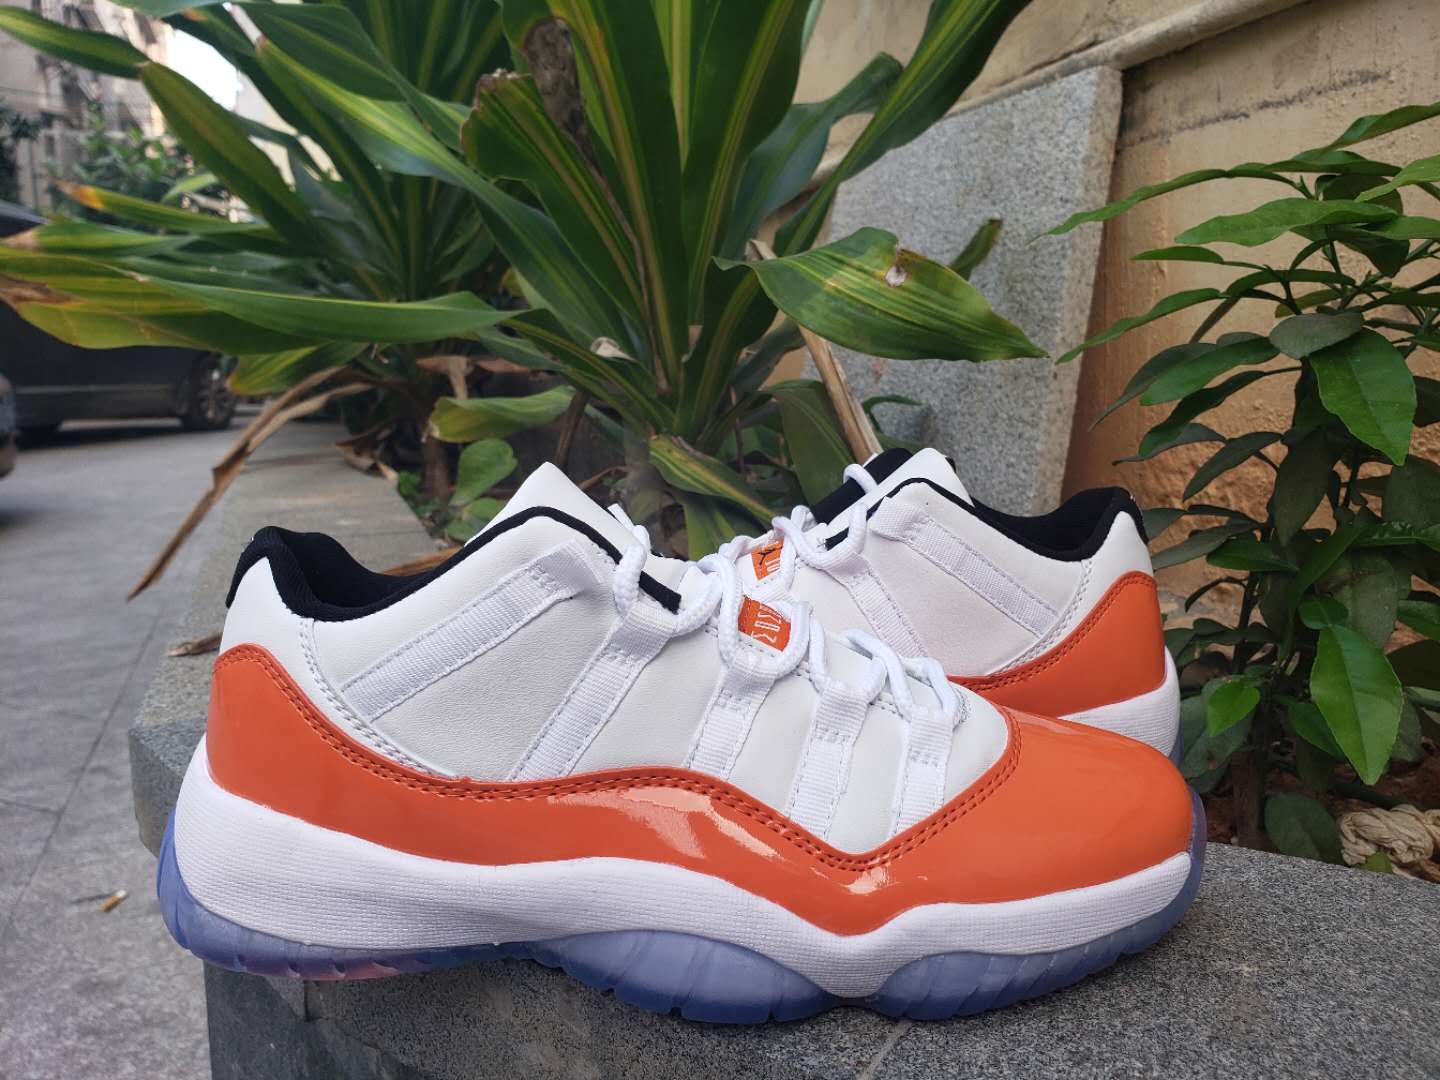 orange and white jordan 11s